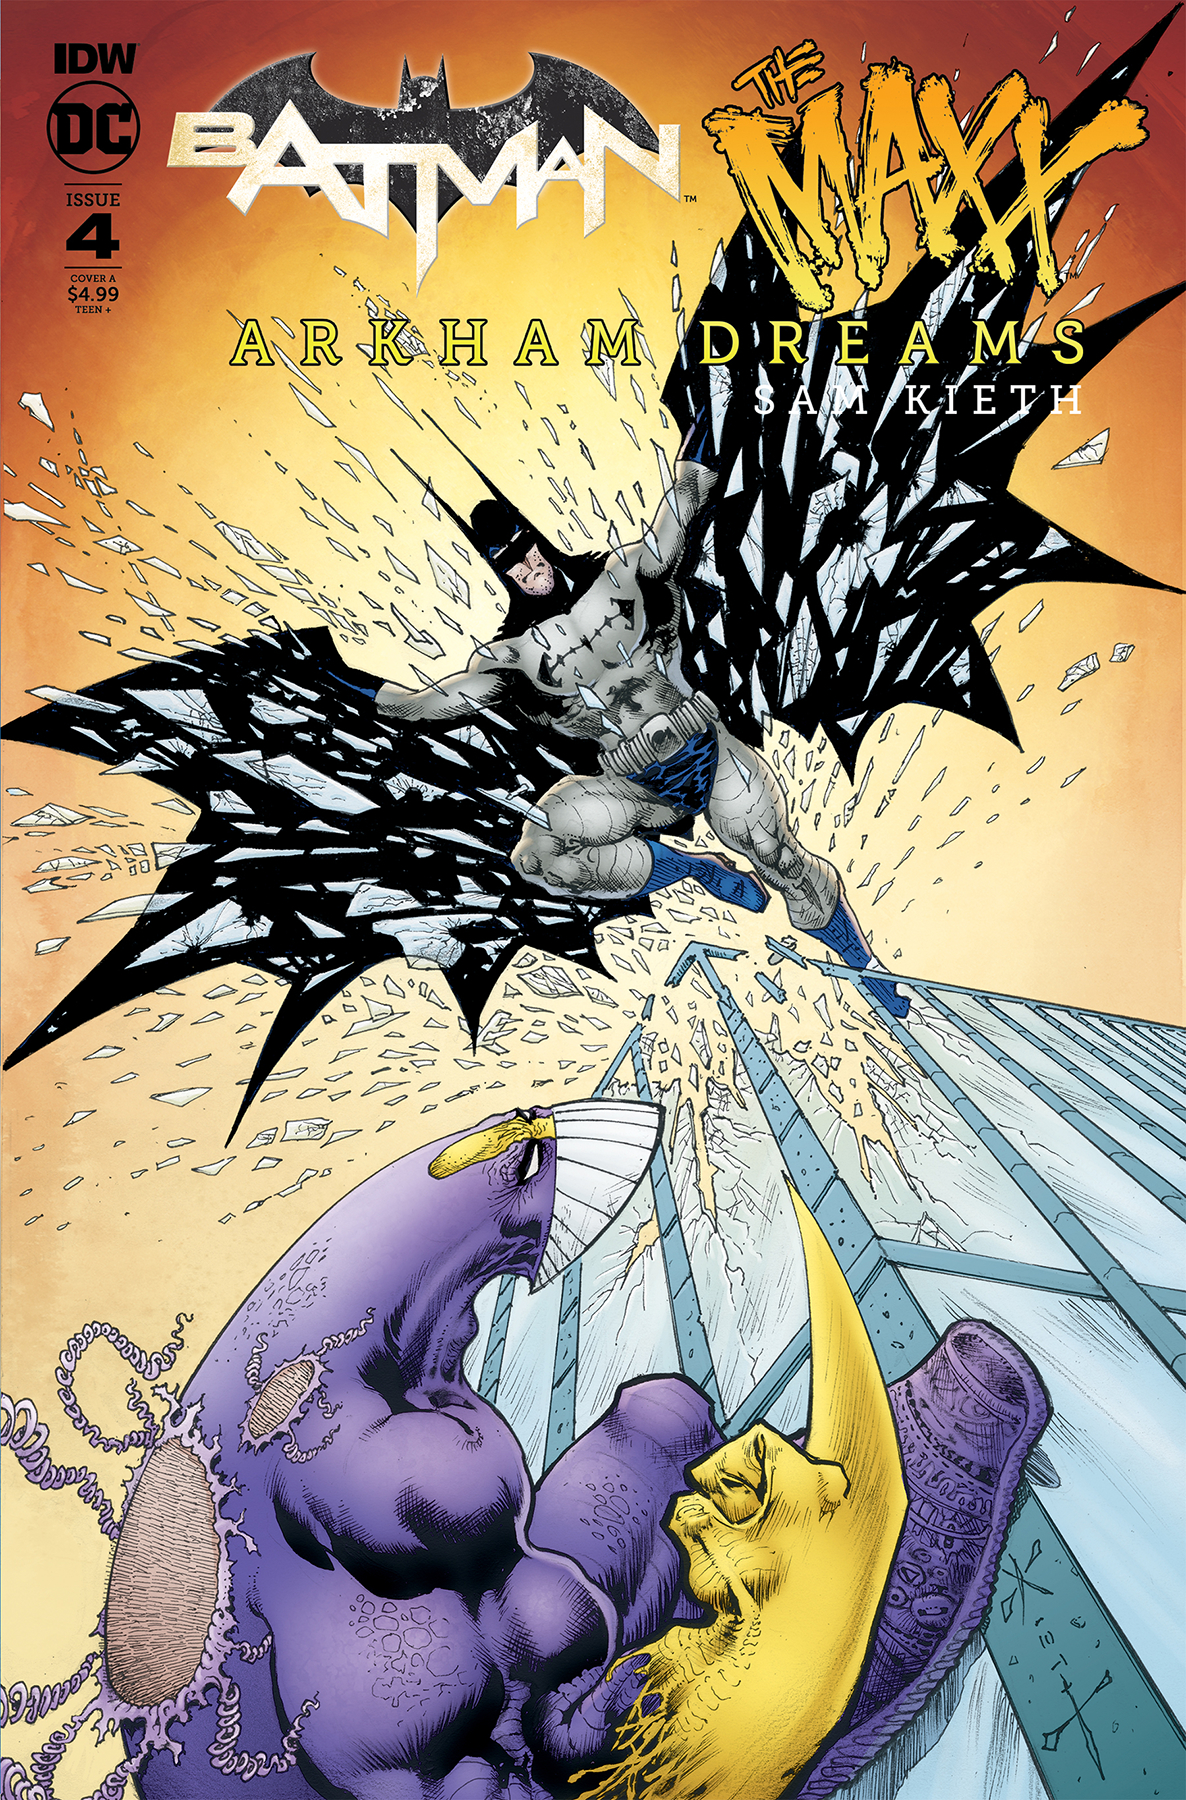 BATMAN THE MAXX ARKHAM DREAMS #4 (OF 5) CVR A KIETH